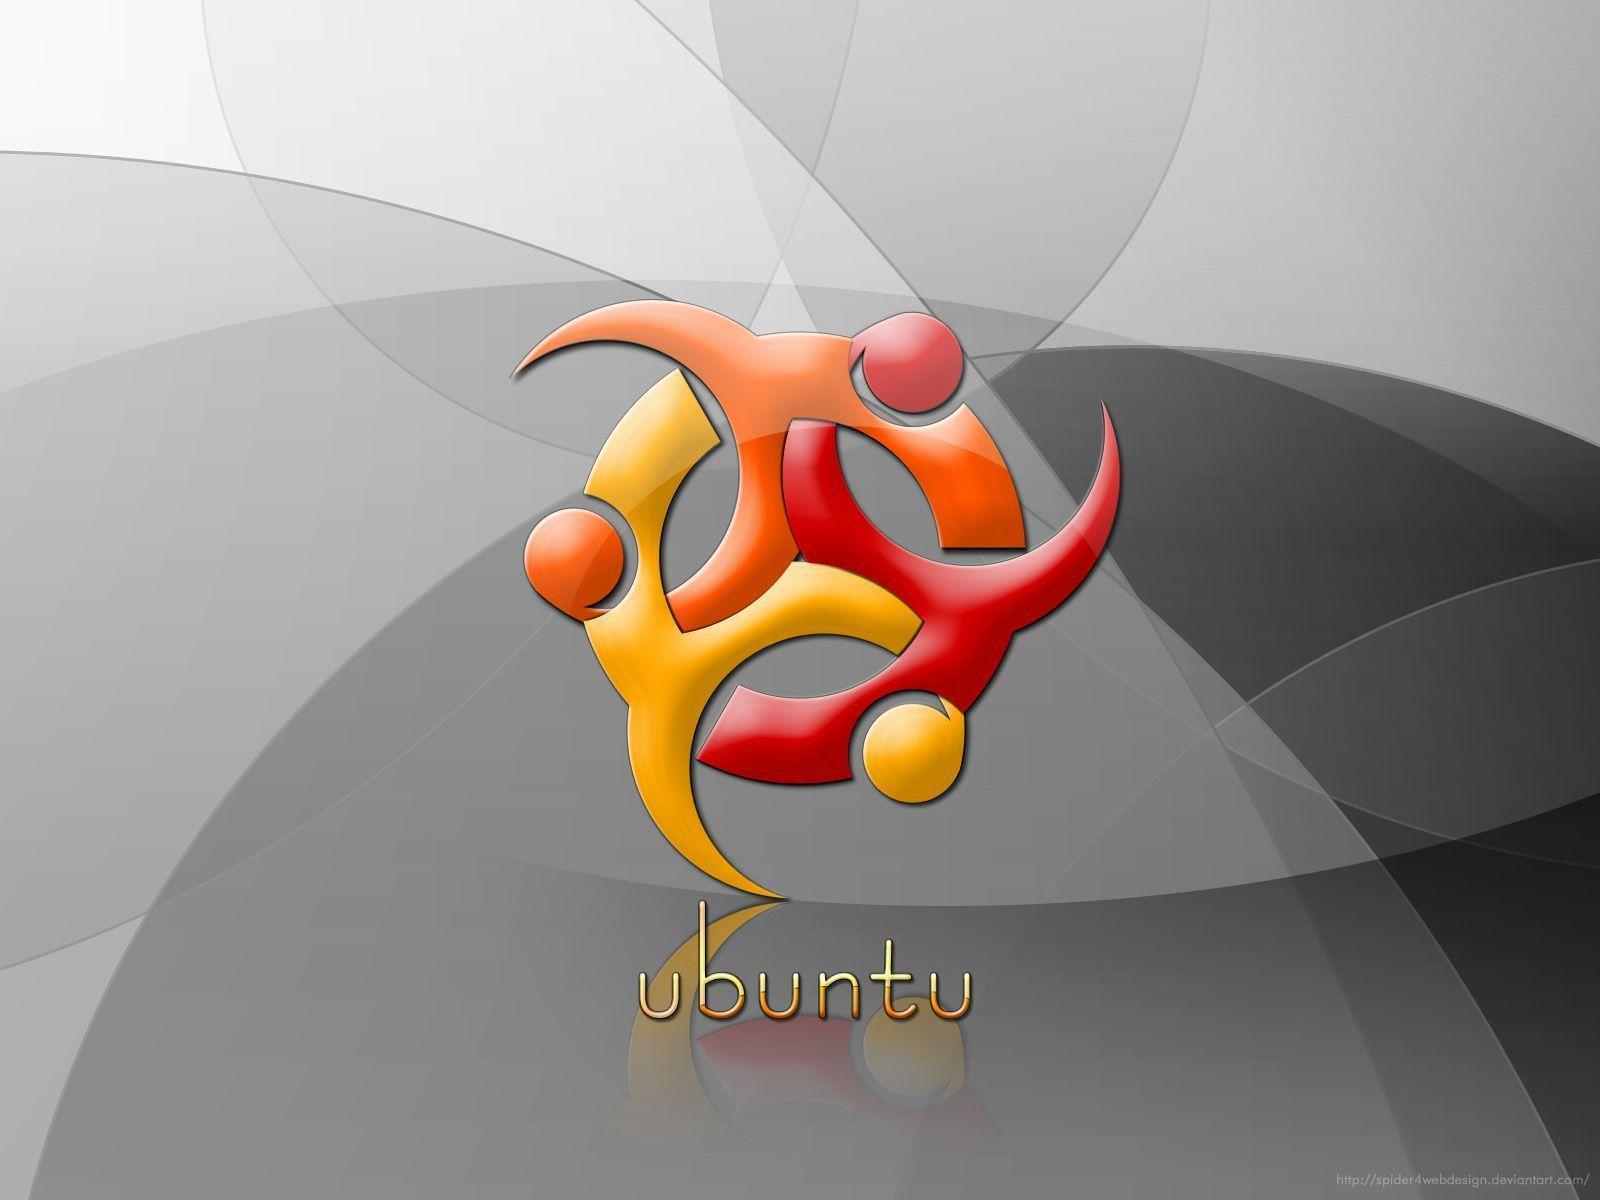 Ubuntu Linux Wallpaper Download HD Wallpaper Picture. HD